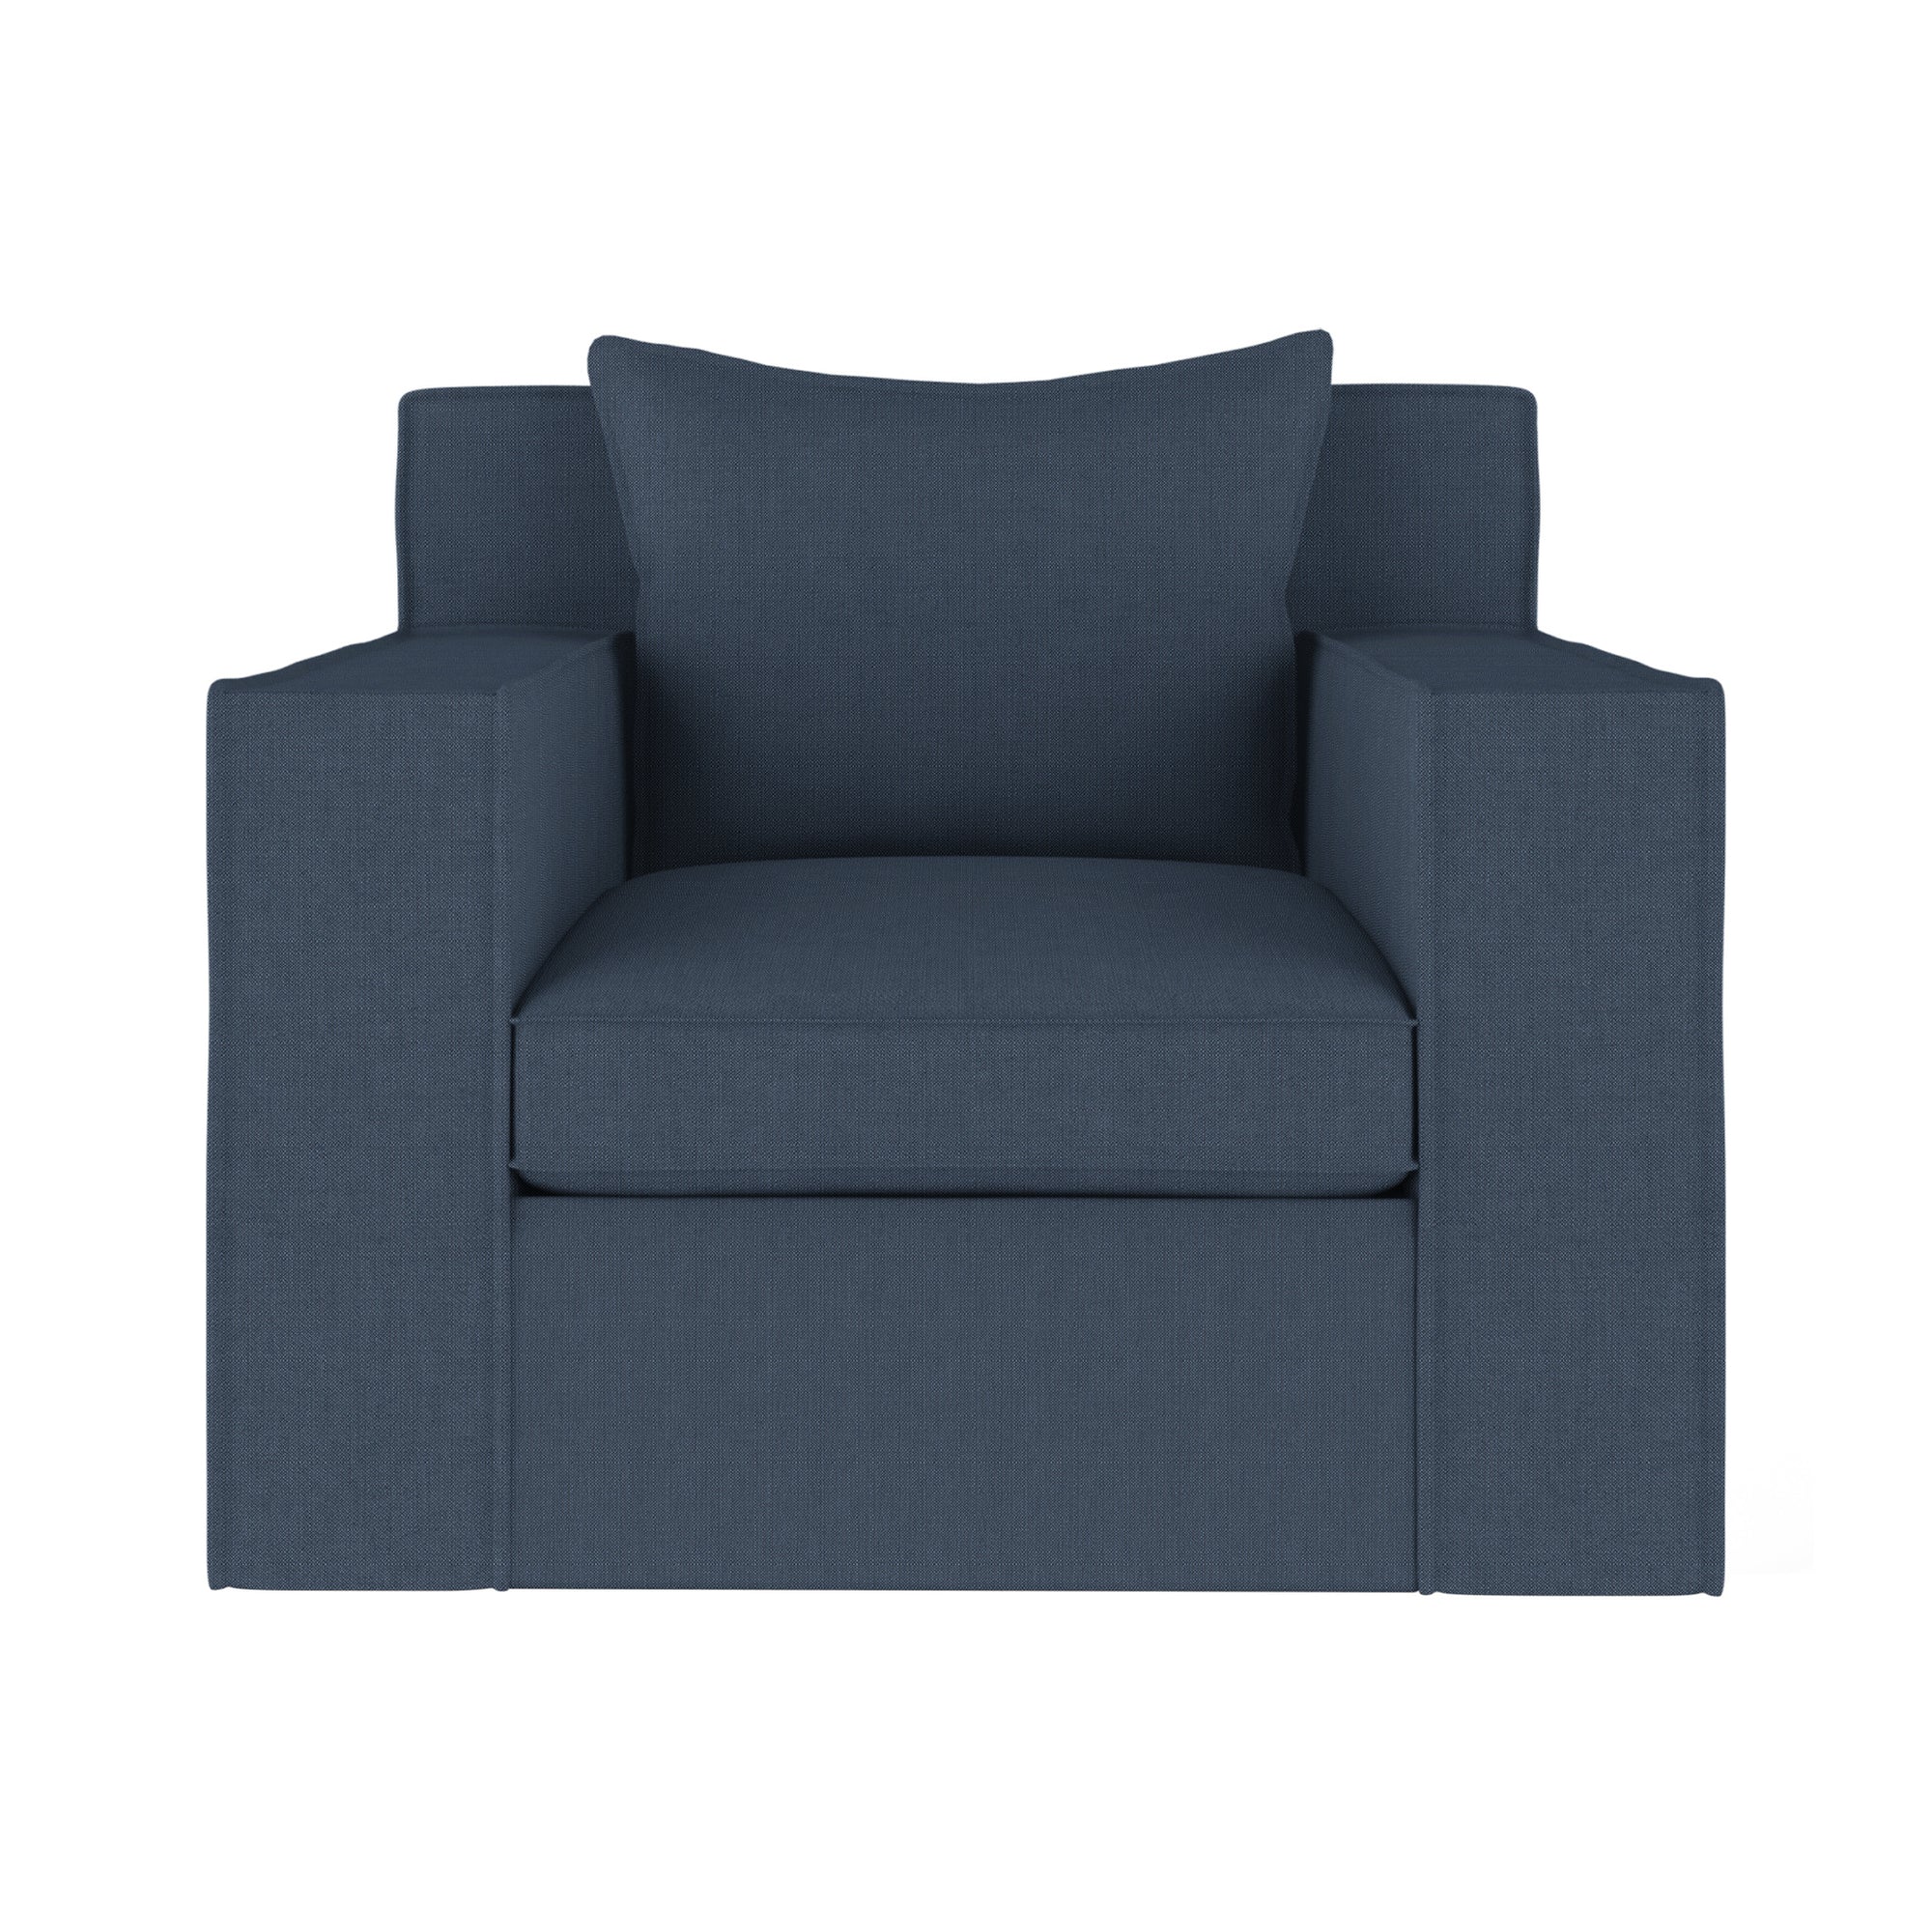 Mulberry Chair - Bluebell Box Weave Linen